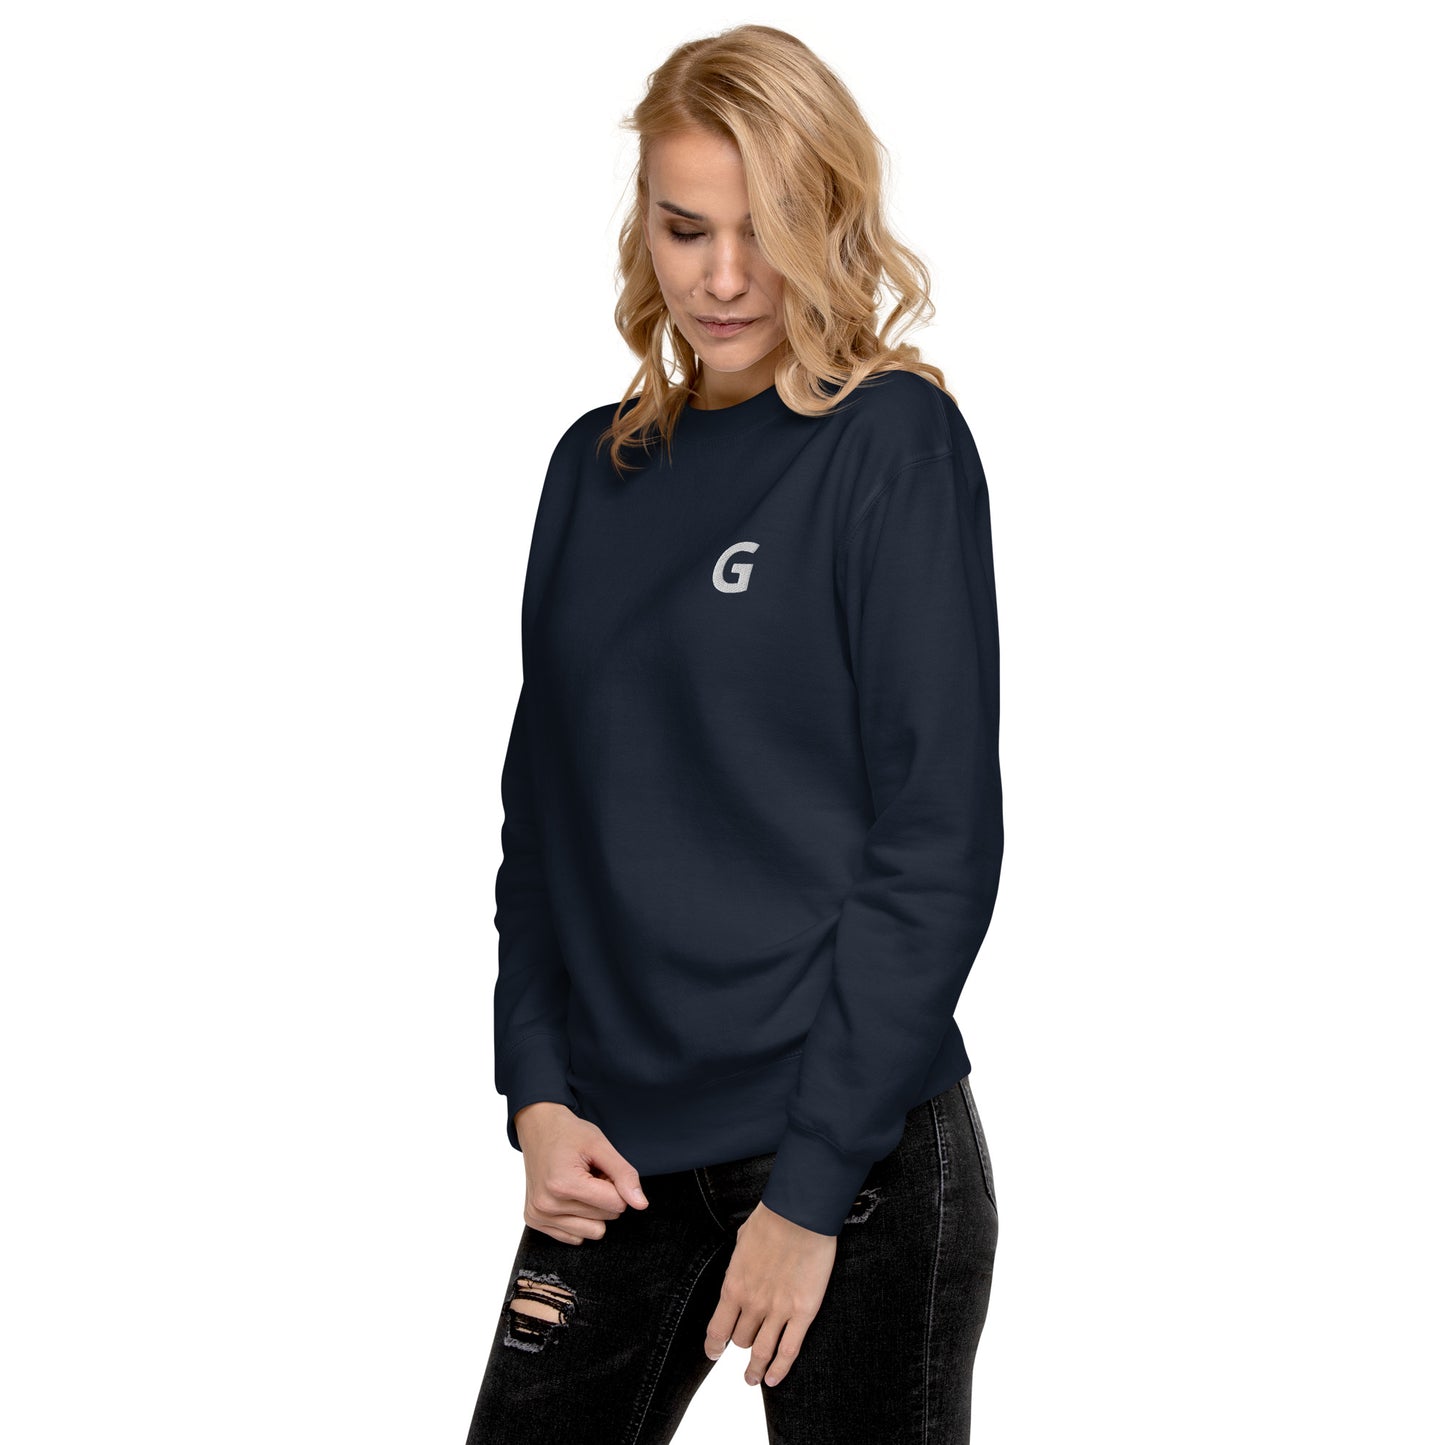 GUYDOSH "G" Unisex Premium Sweatshirt